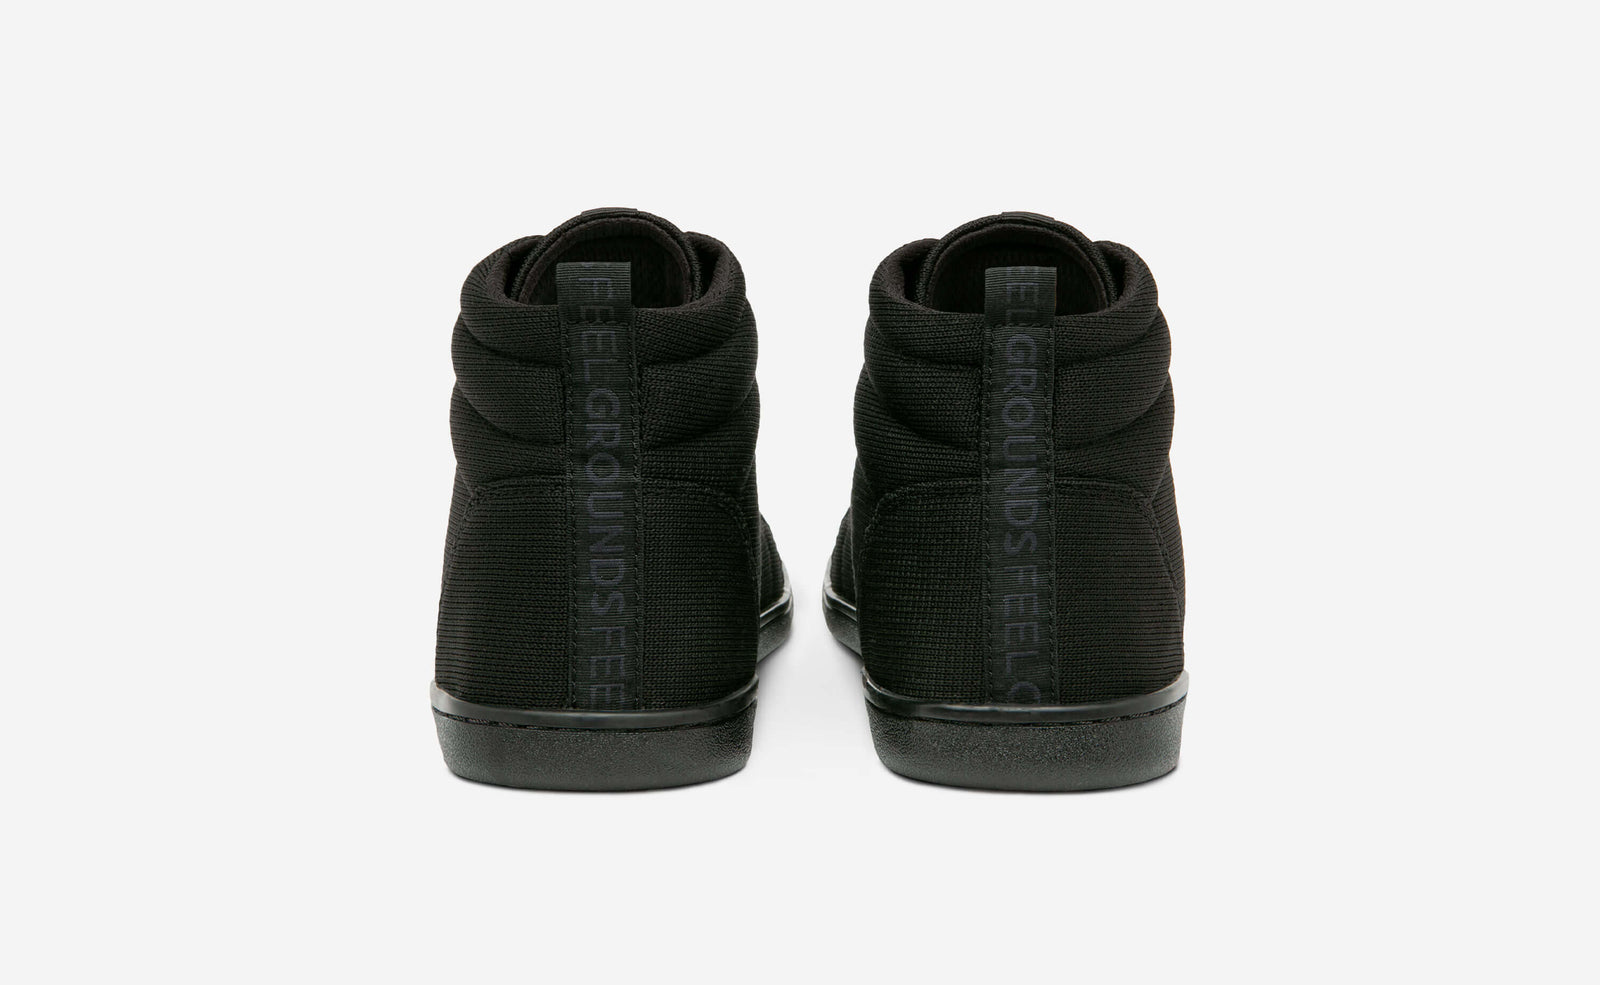 Feelgrounds Original Knit, Barefoot Shoes, Casual Minimal Sneakers, Zero Drop, Wide Toe Box, Vegan, Unisex | All Black - US M15